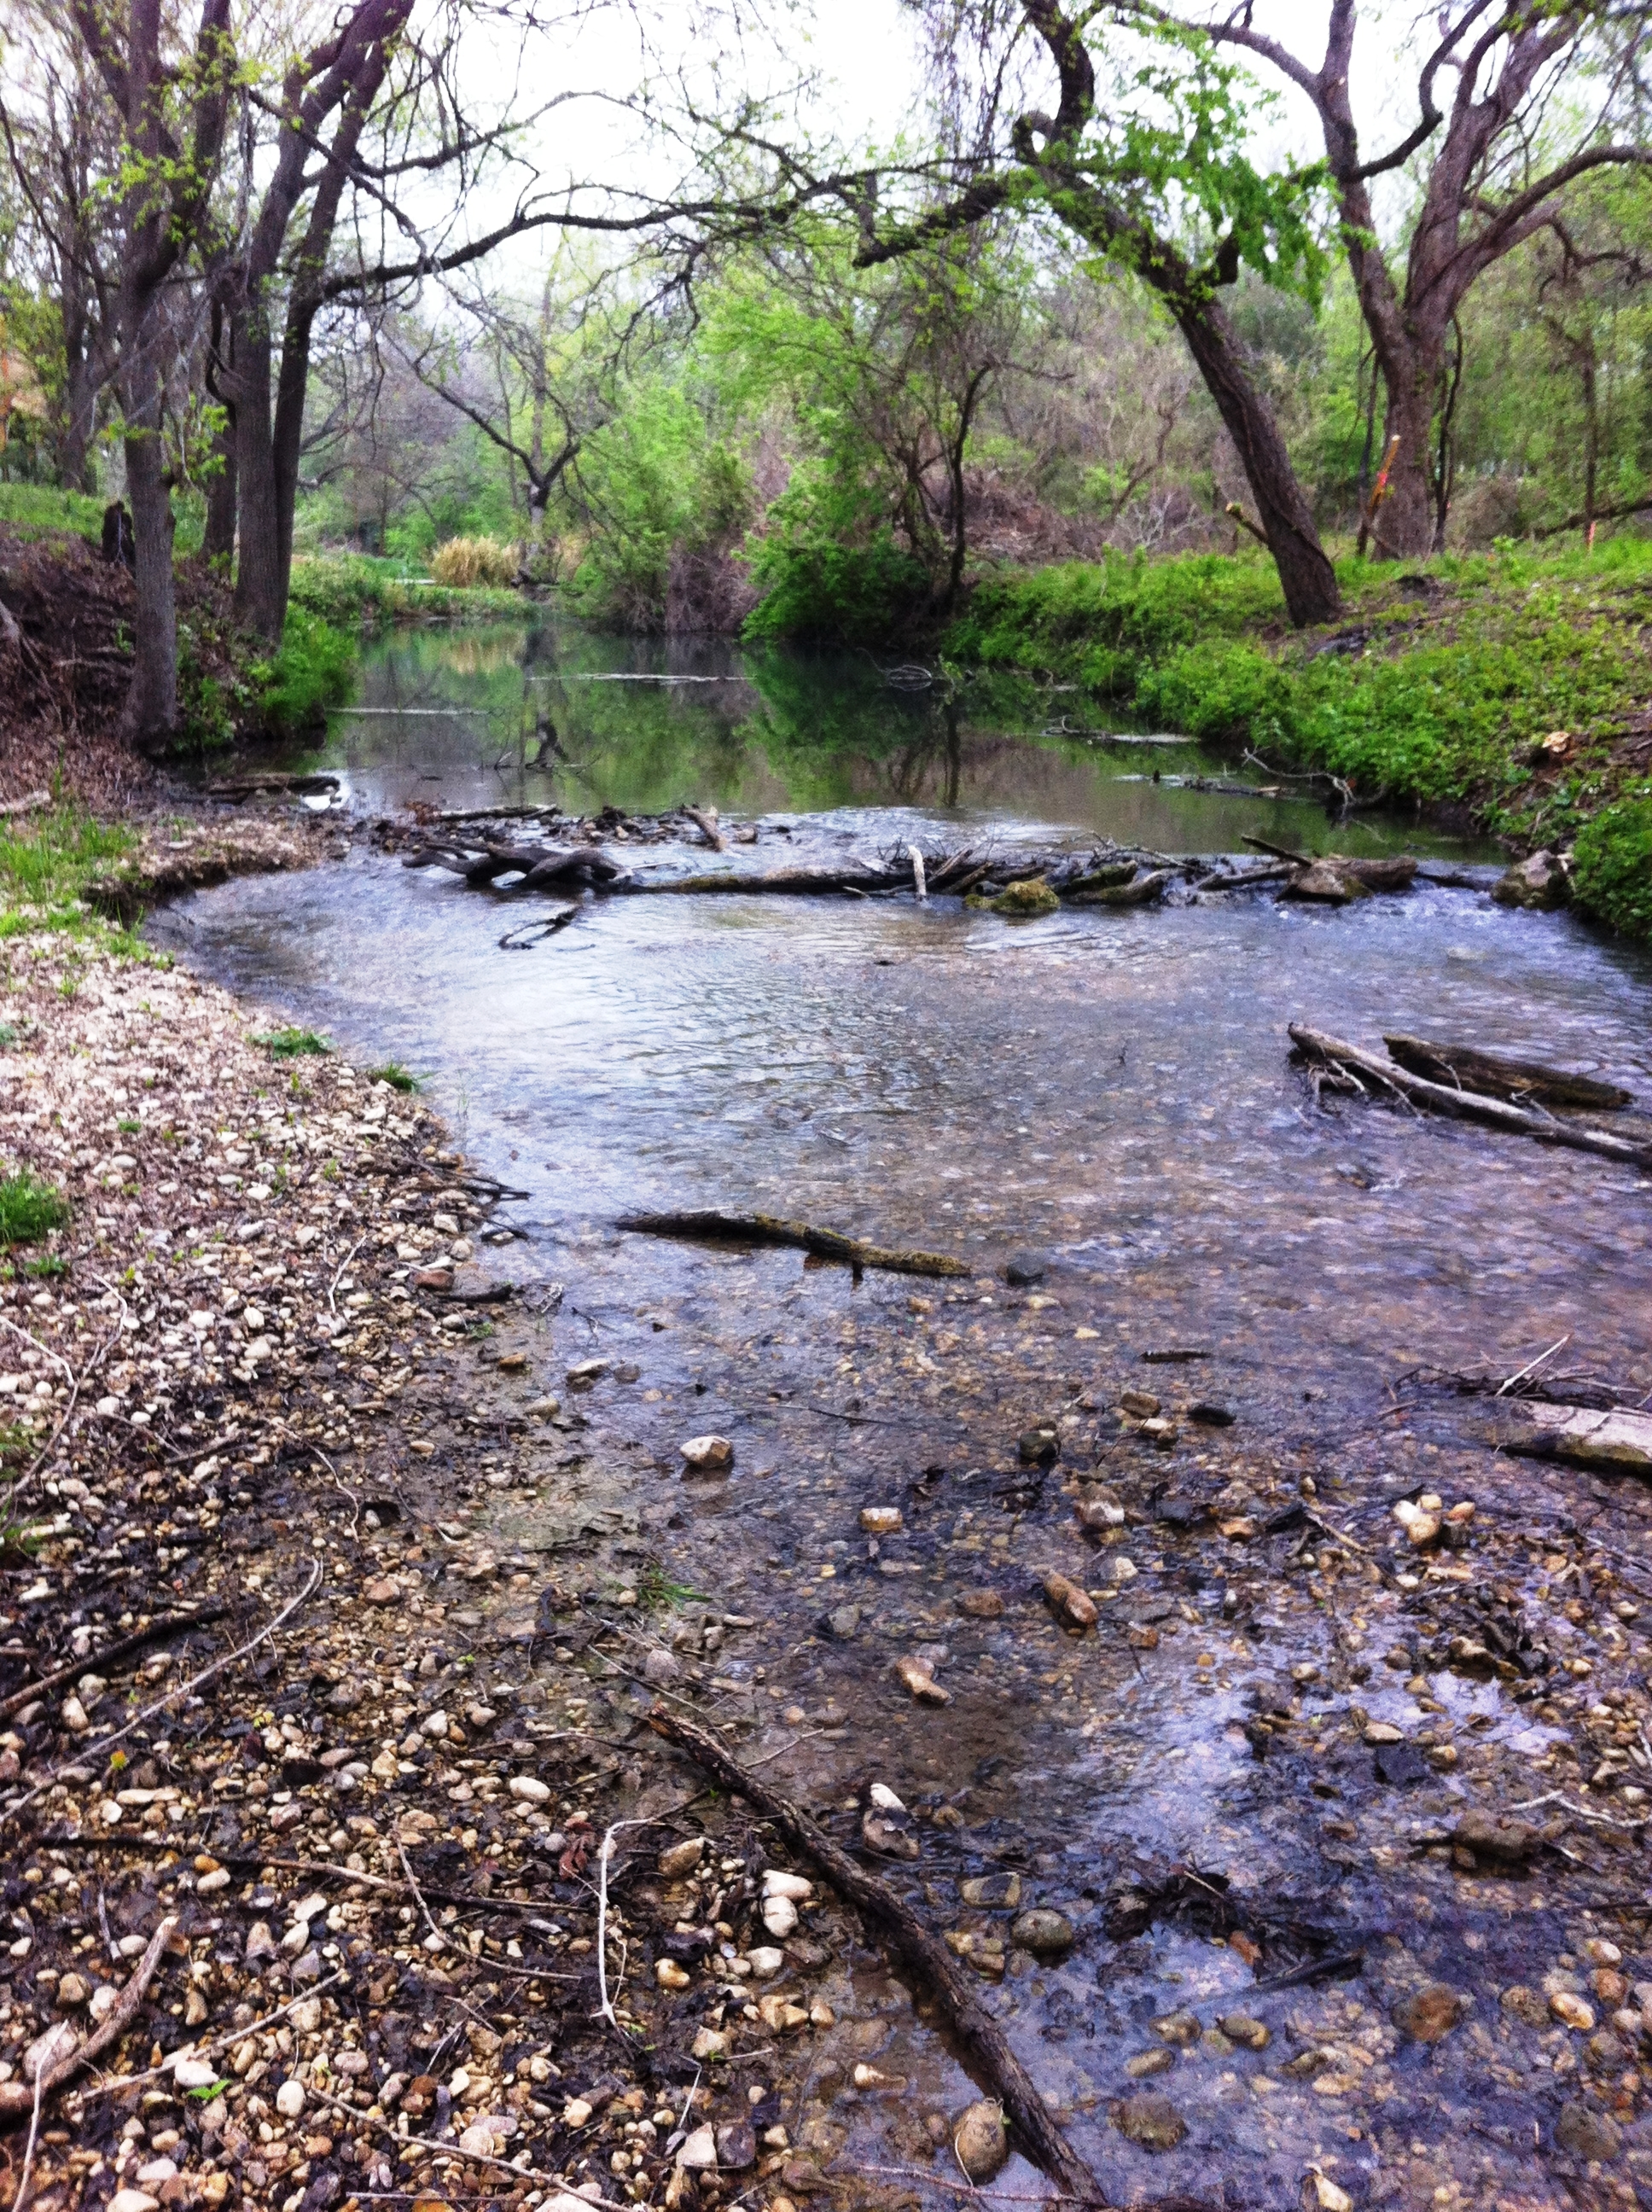 Geronimo, Alligator creeks water quality training set May 25